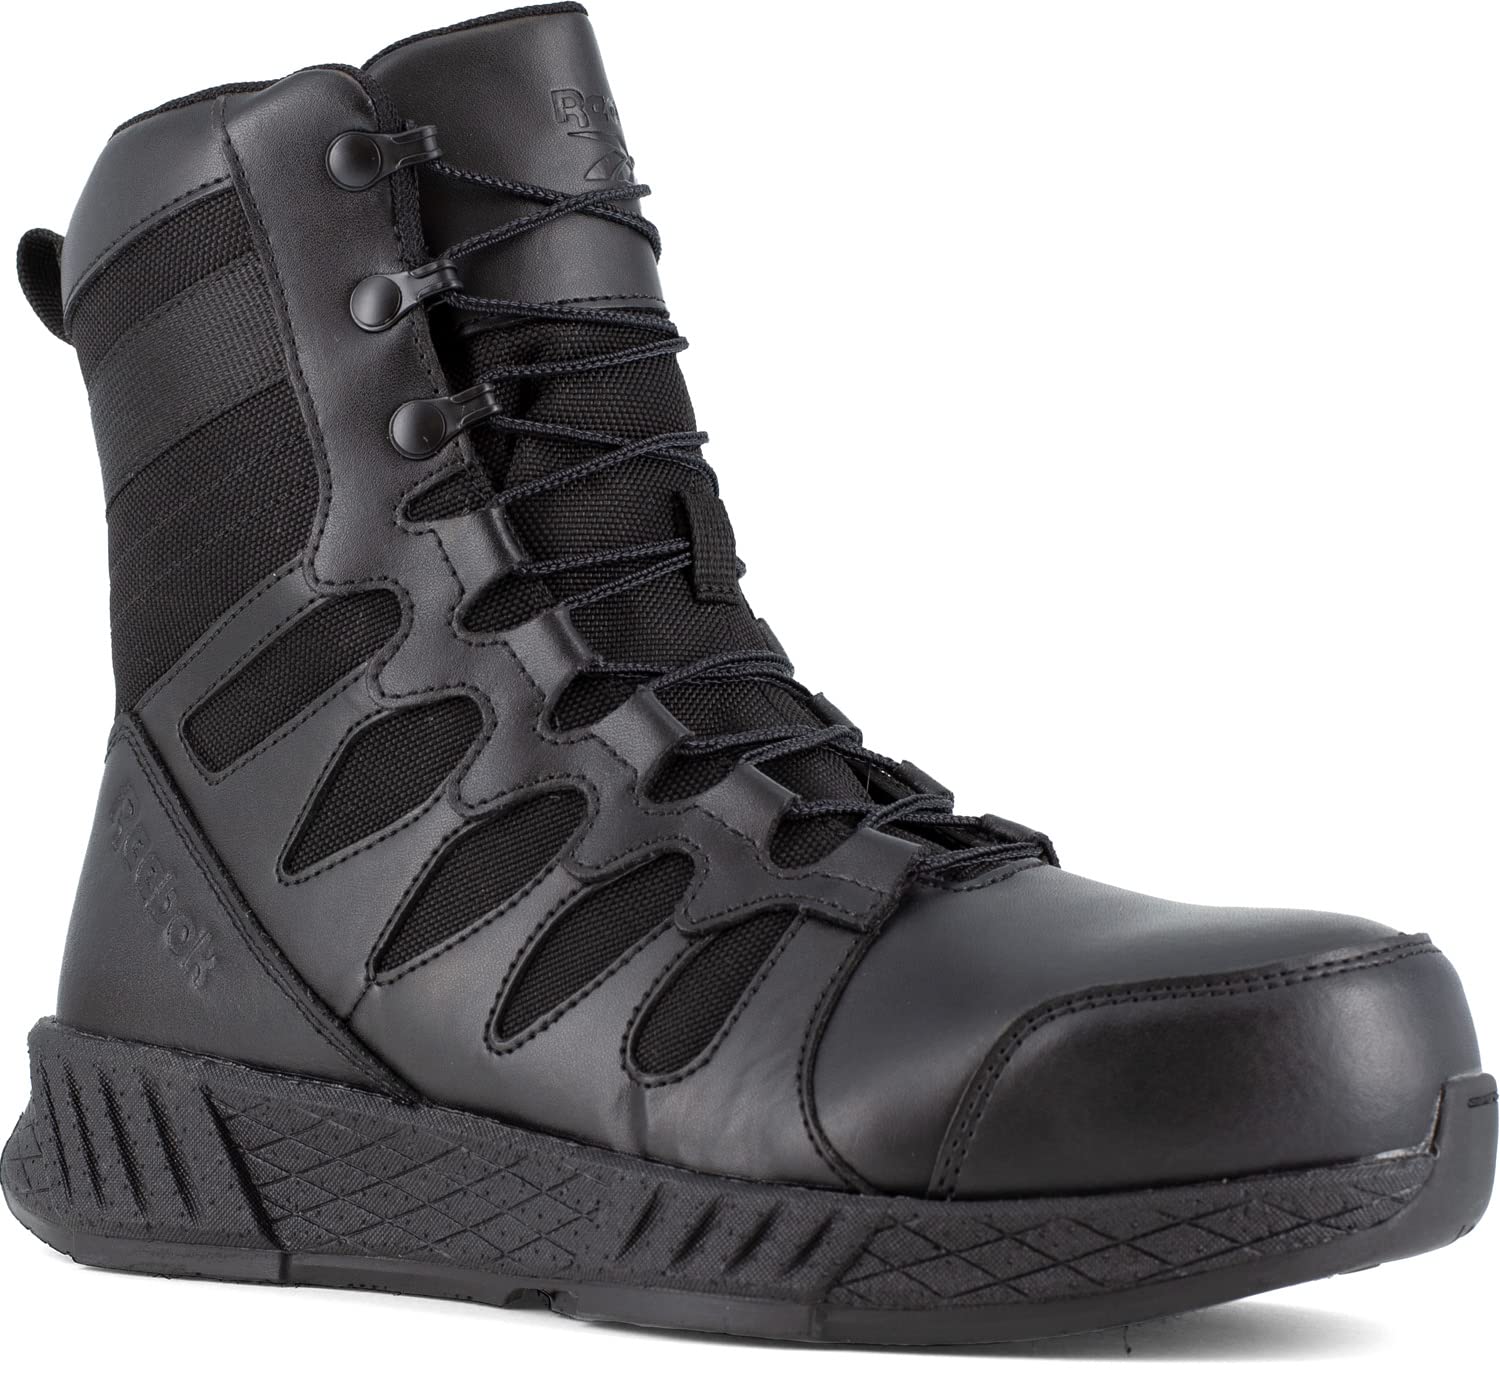 Reebok Work Floatride Energy Tactical Men's, Black, 8 Inch Side-Zip Style, Composite Toe, EH, Slip-Resistant Work Boot